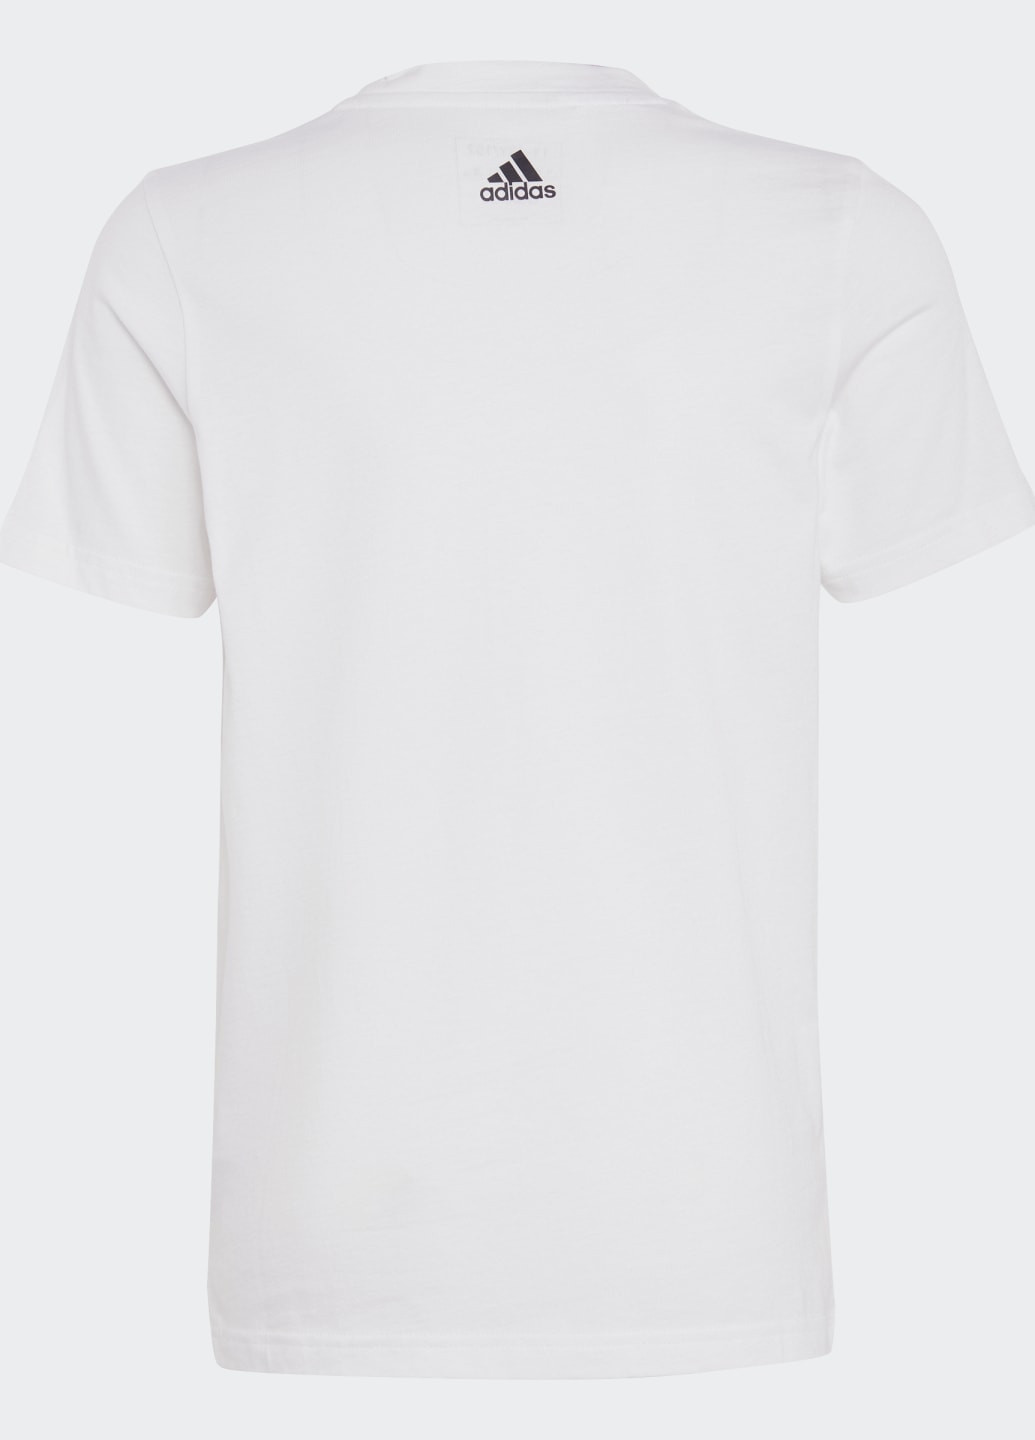 Біла демісезонна футболка essentials linear logo cotton adidas